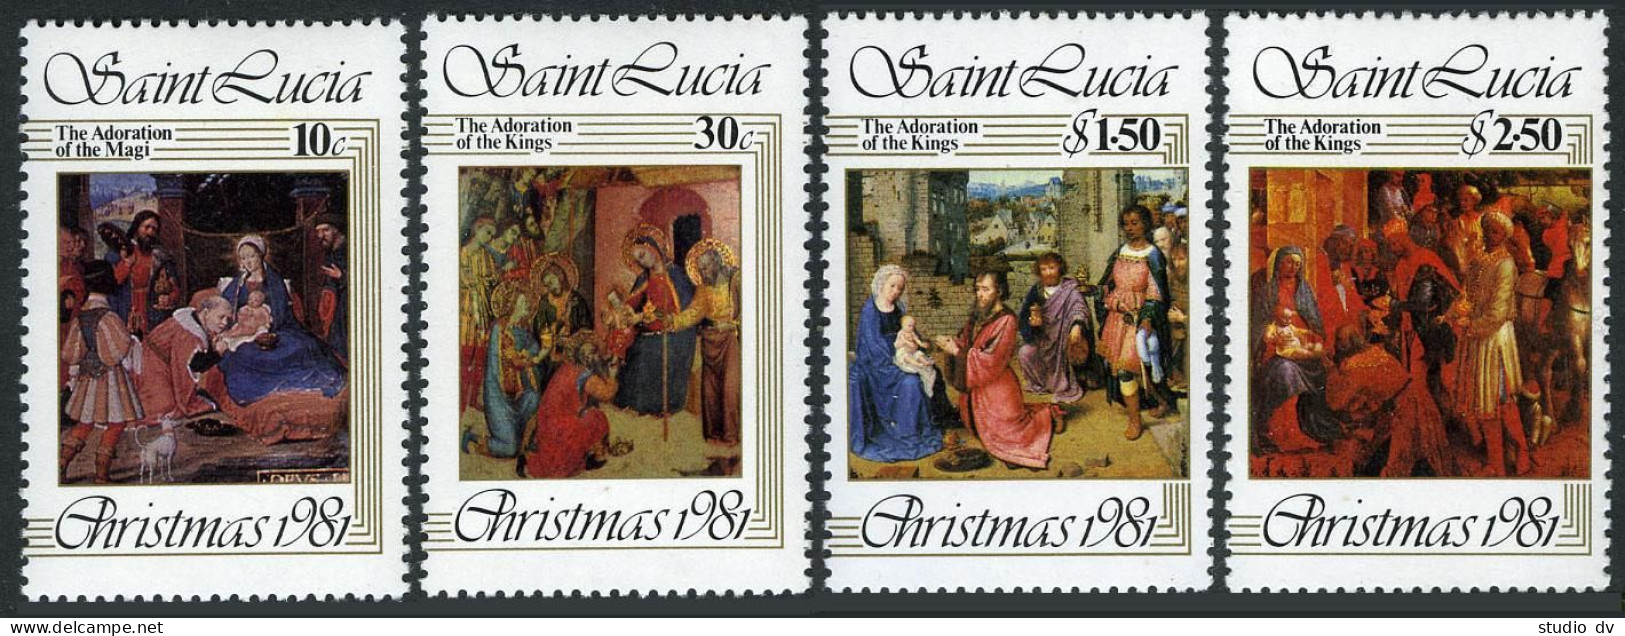 St Lucia 564-567,MNH.Mi 564-567. Christmas 1981.Sfoza,Orcanga,Gerard,Foppa. - St.Lucie (1979-...)